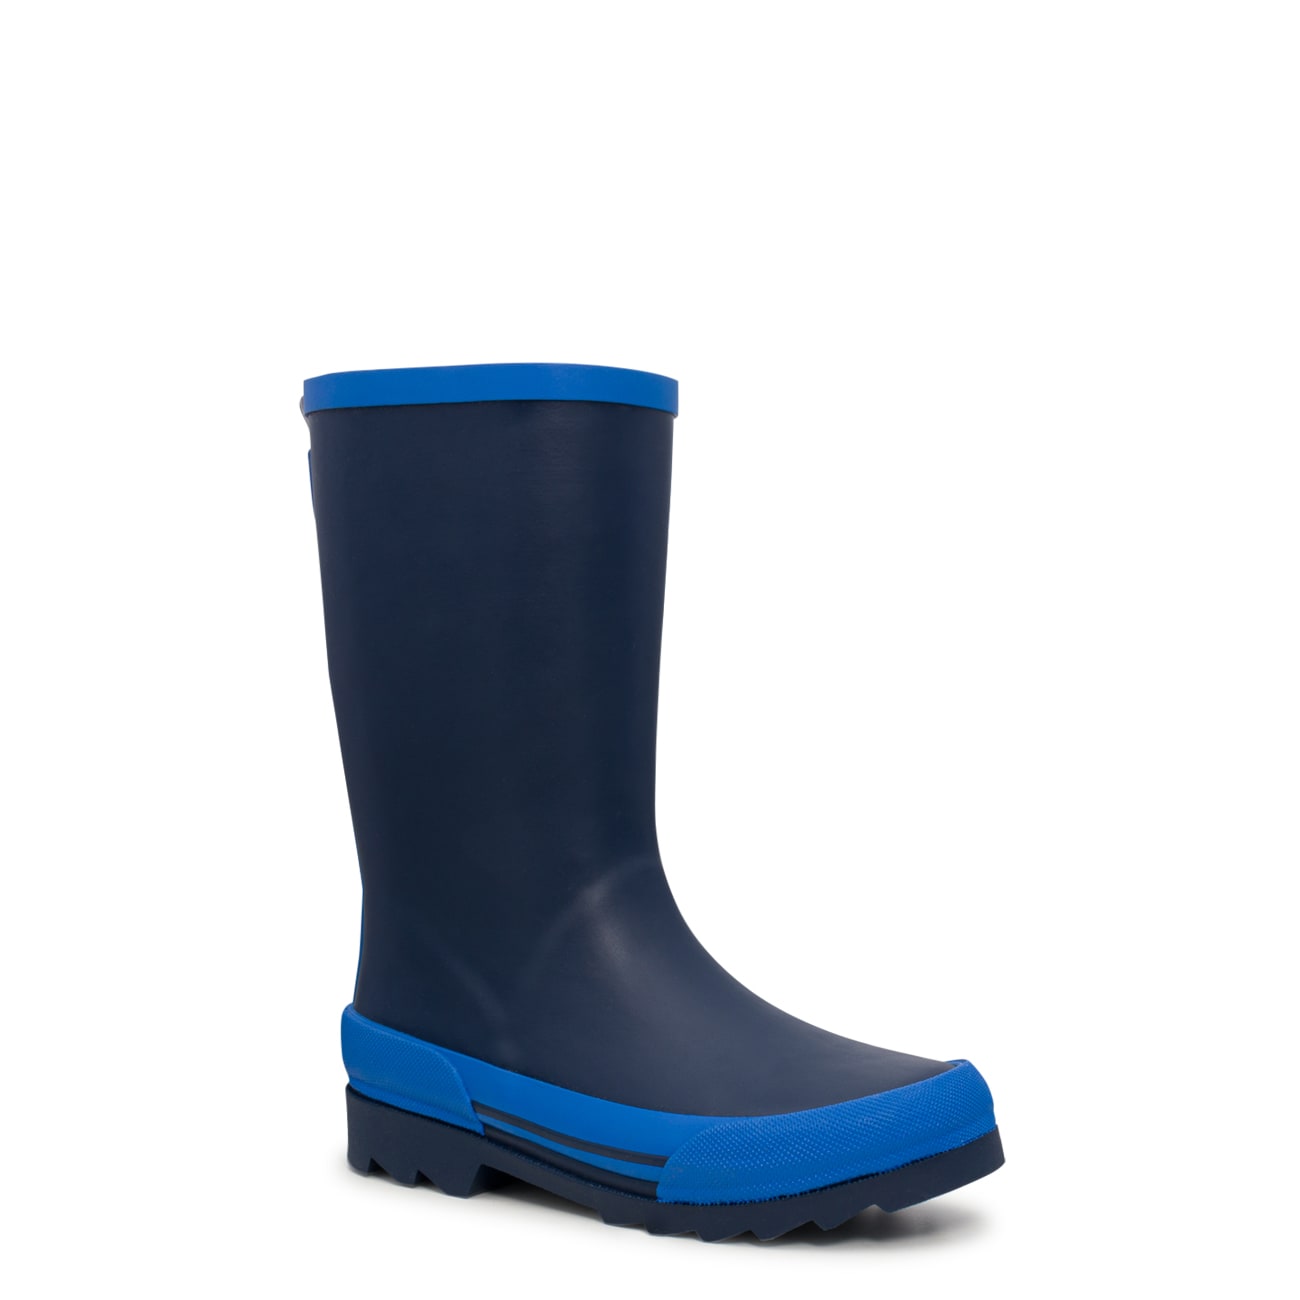 Youth Boys' Primus Waterproof Rain Boot